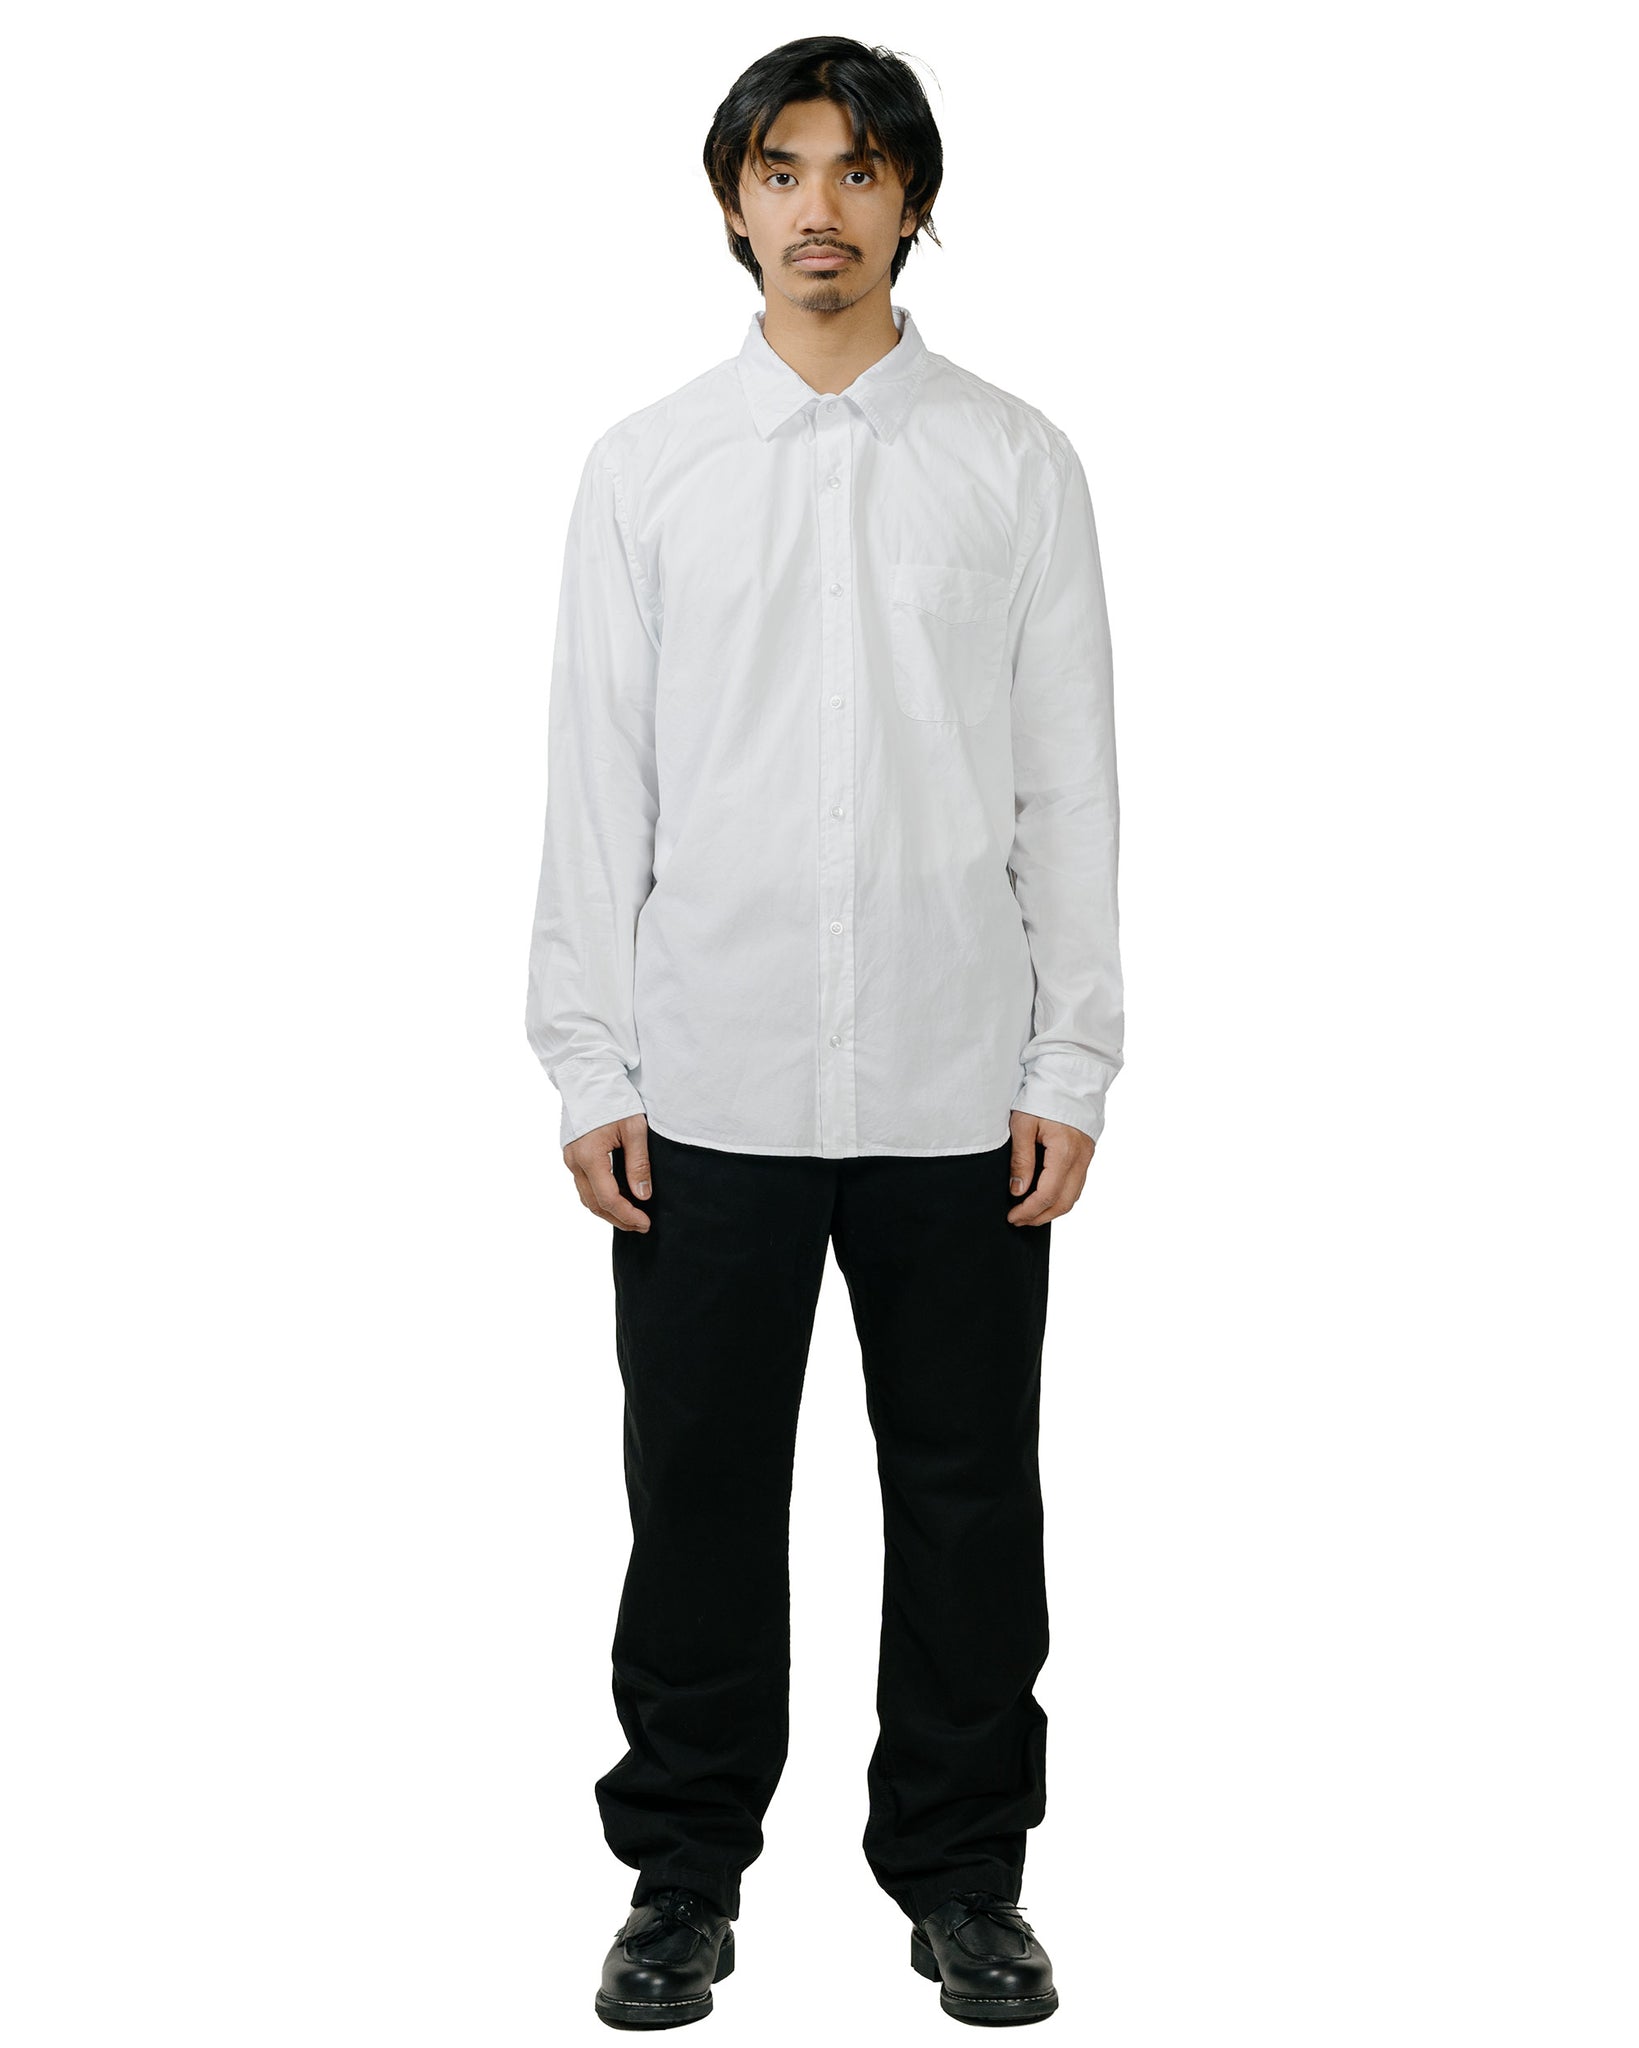 Save Khaki United Poplin Standard Shirt White model full